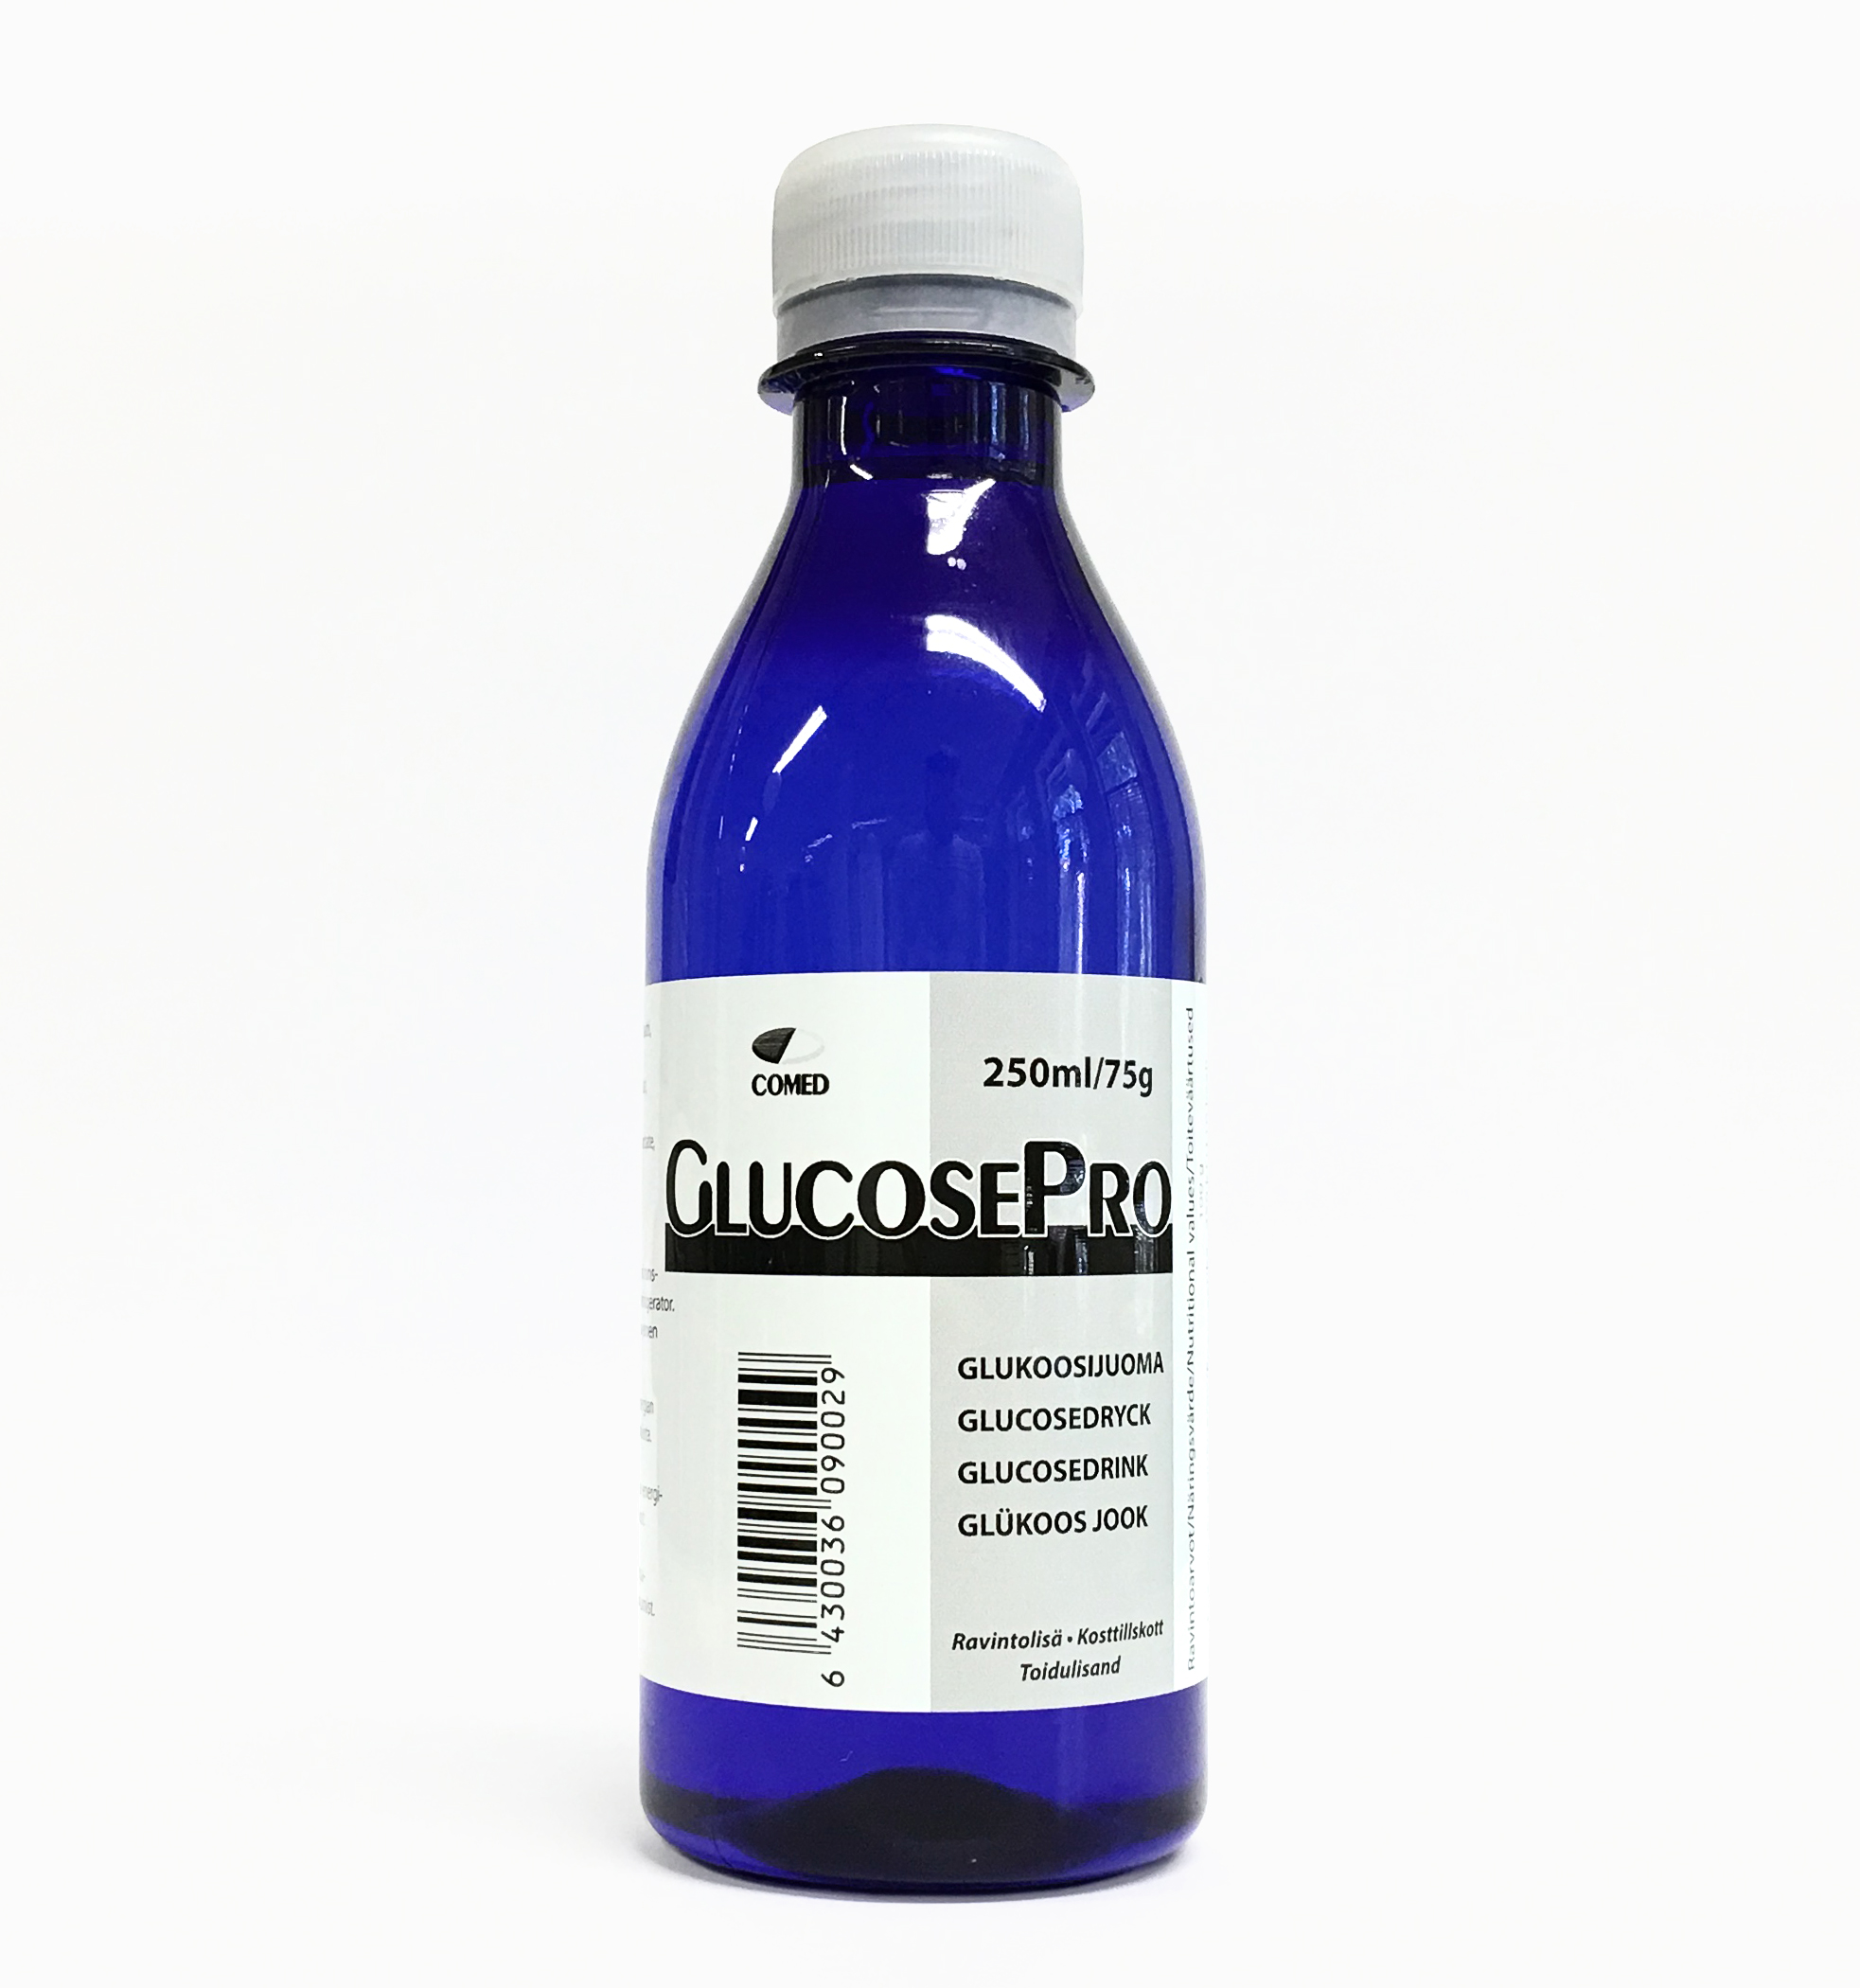 Comed OY GlucosePro - Peroral glucosetest, 250 ml